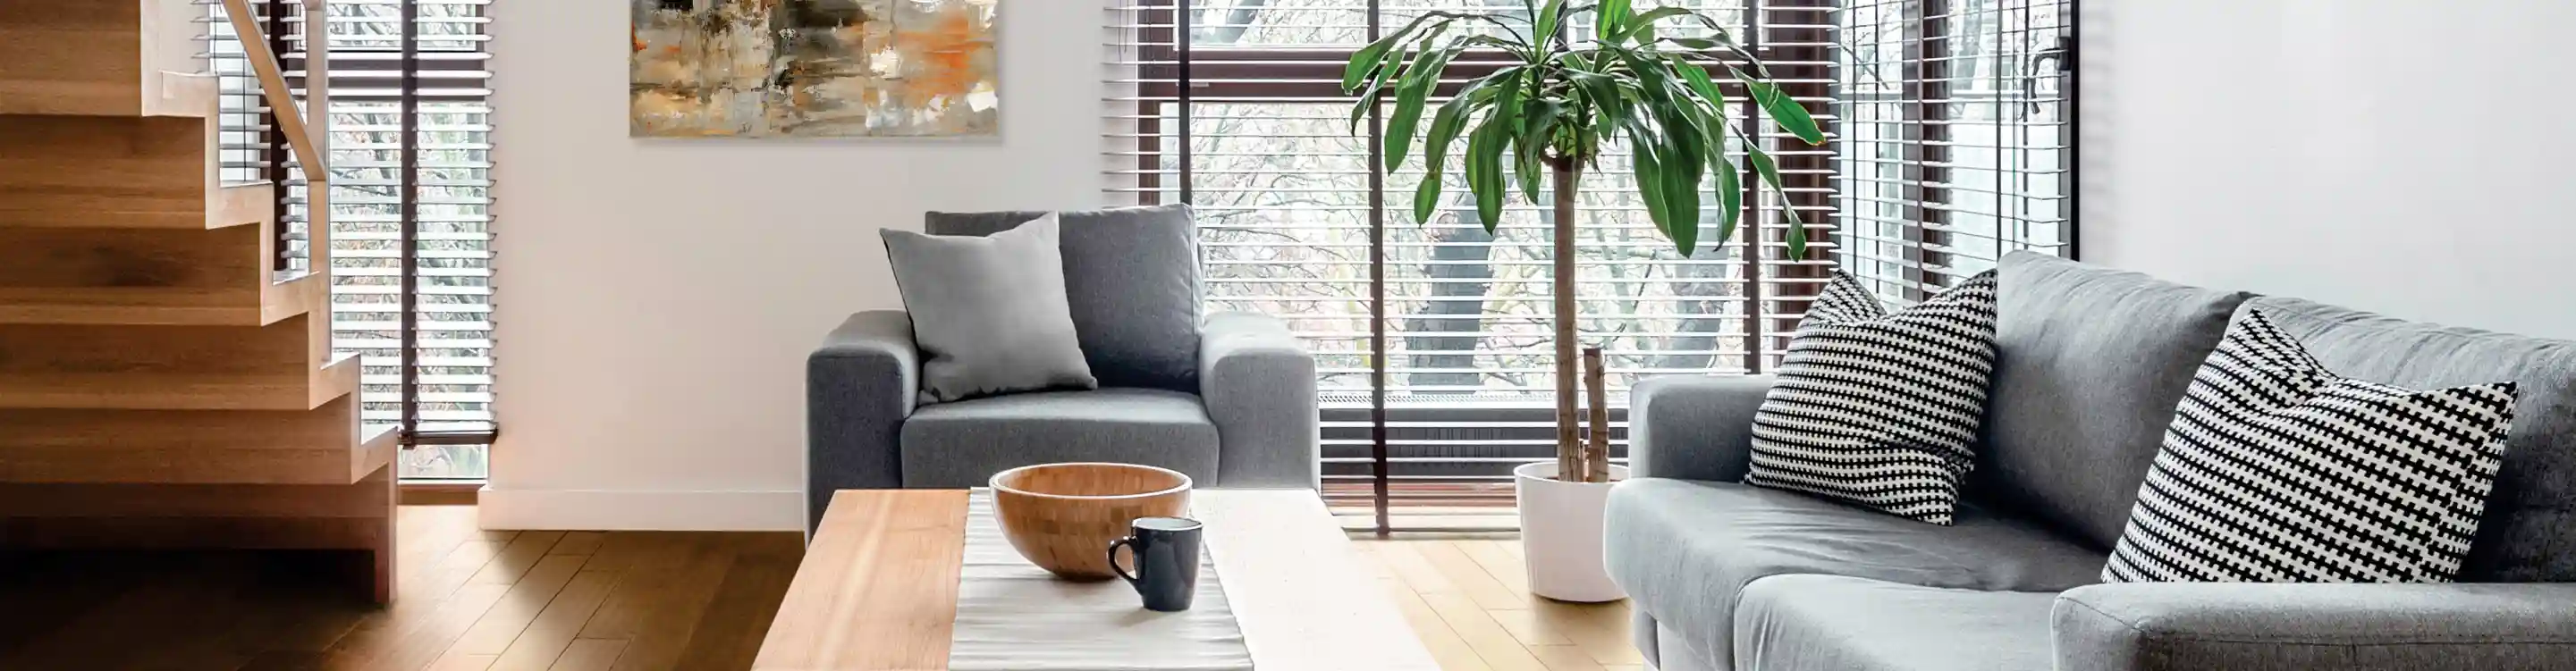 Graber dark brown blinds in living room with grey sofa and honey hardwood floors